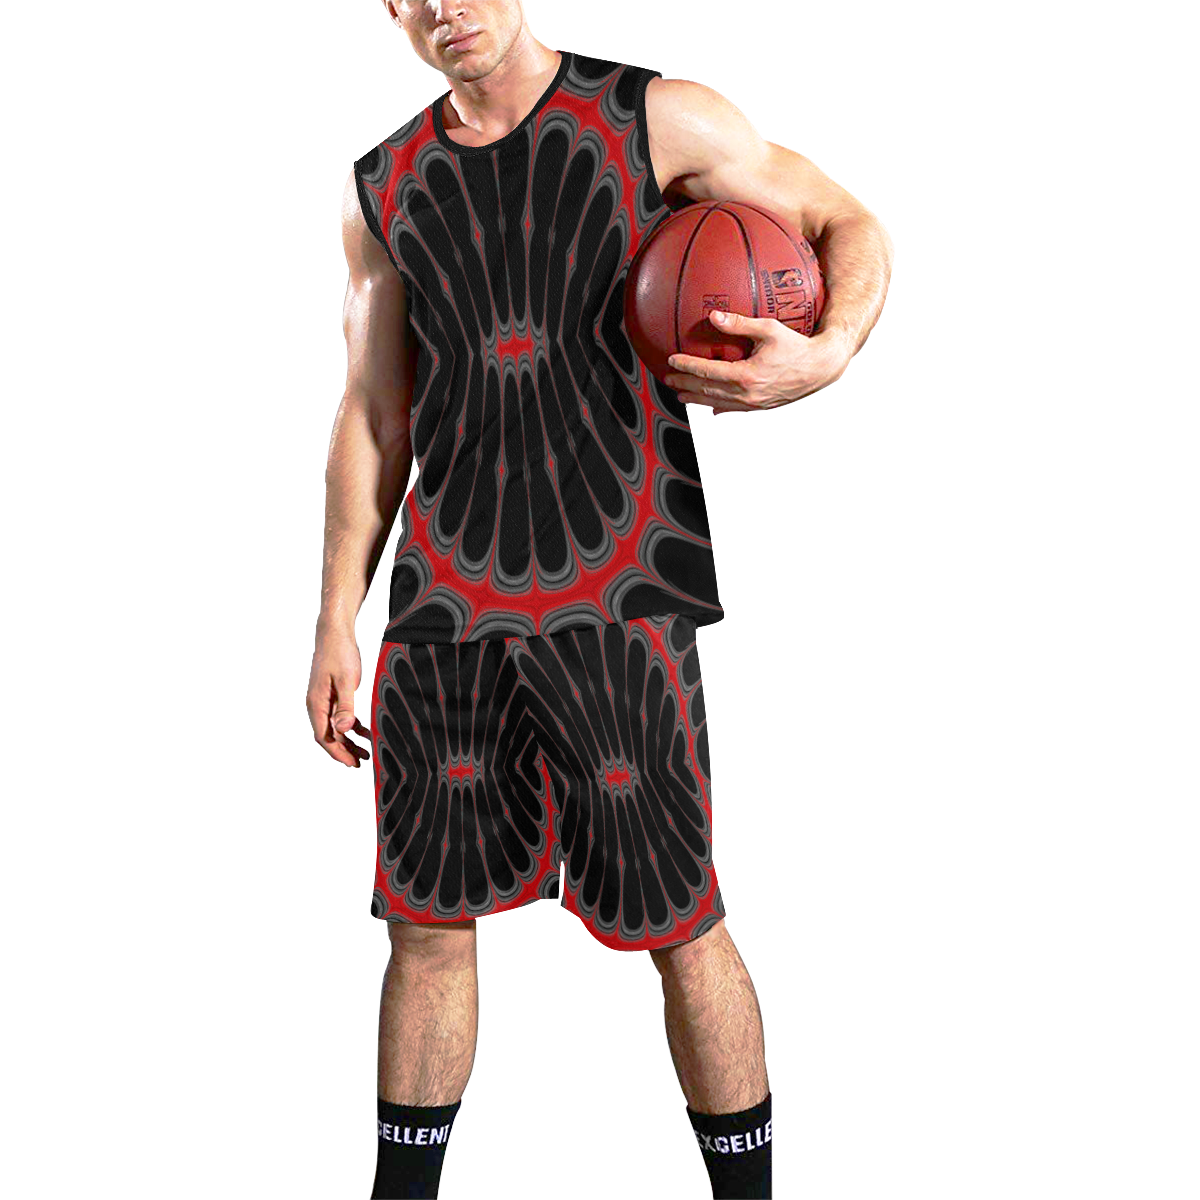 32_5000 23 All Over Print Basketball Uniform